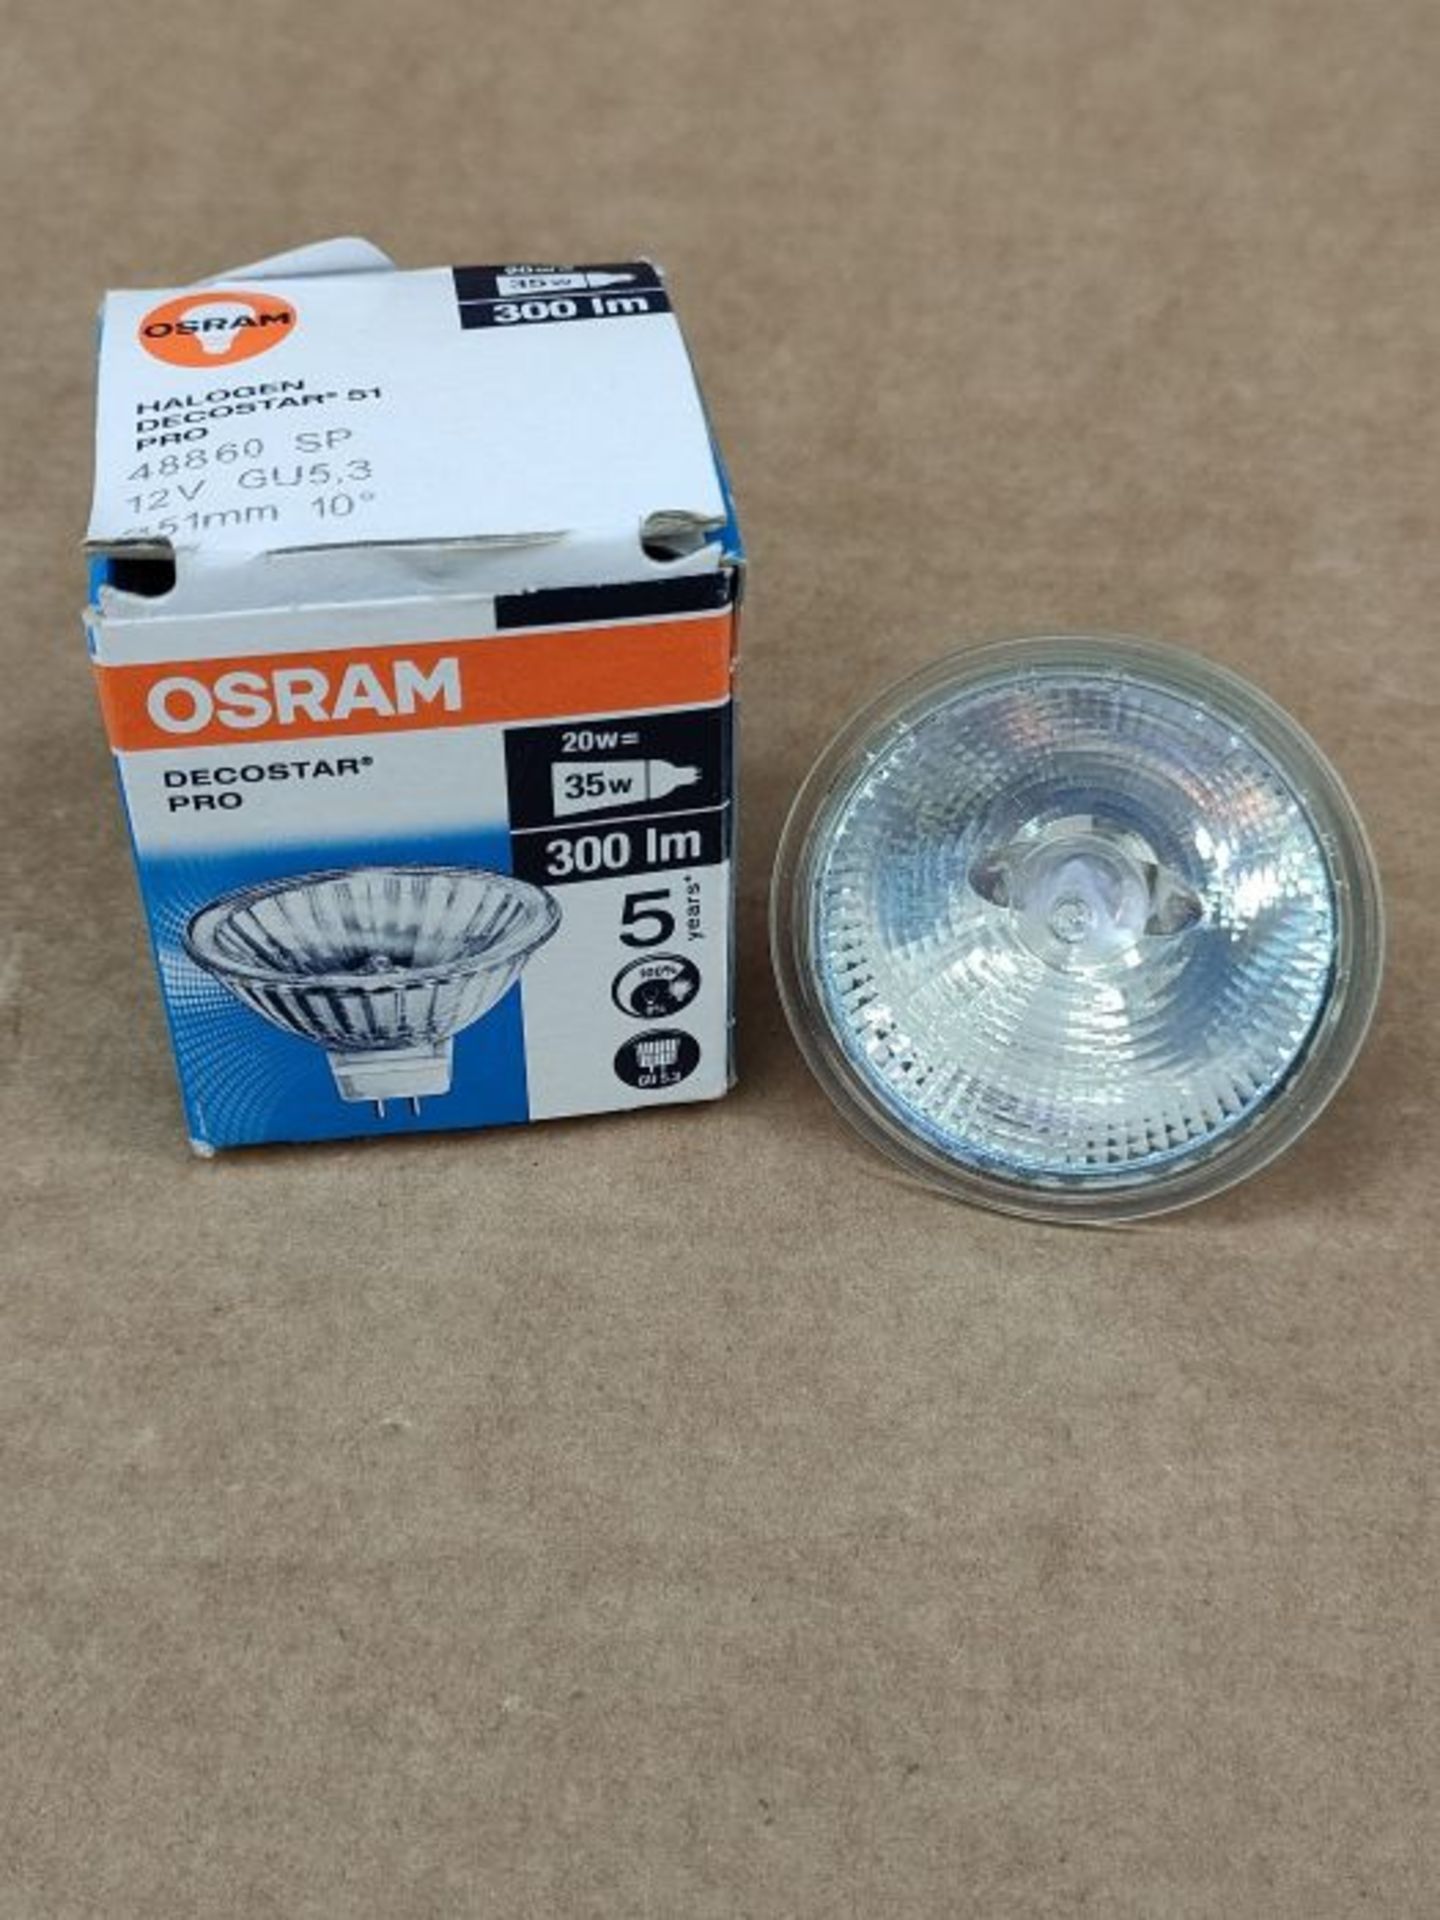 Osram 48860 ECO SP 20 W Halogen Bulb, Warm White - Image 2 of 2